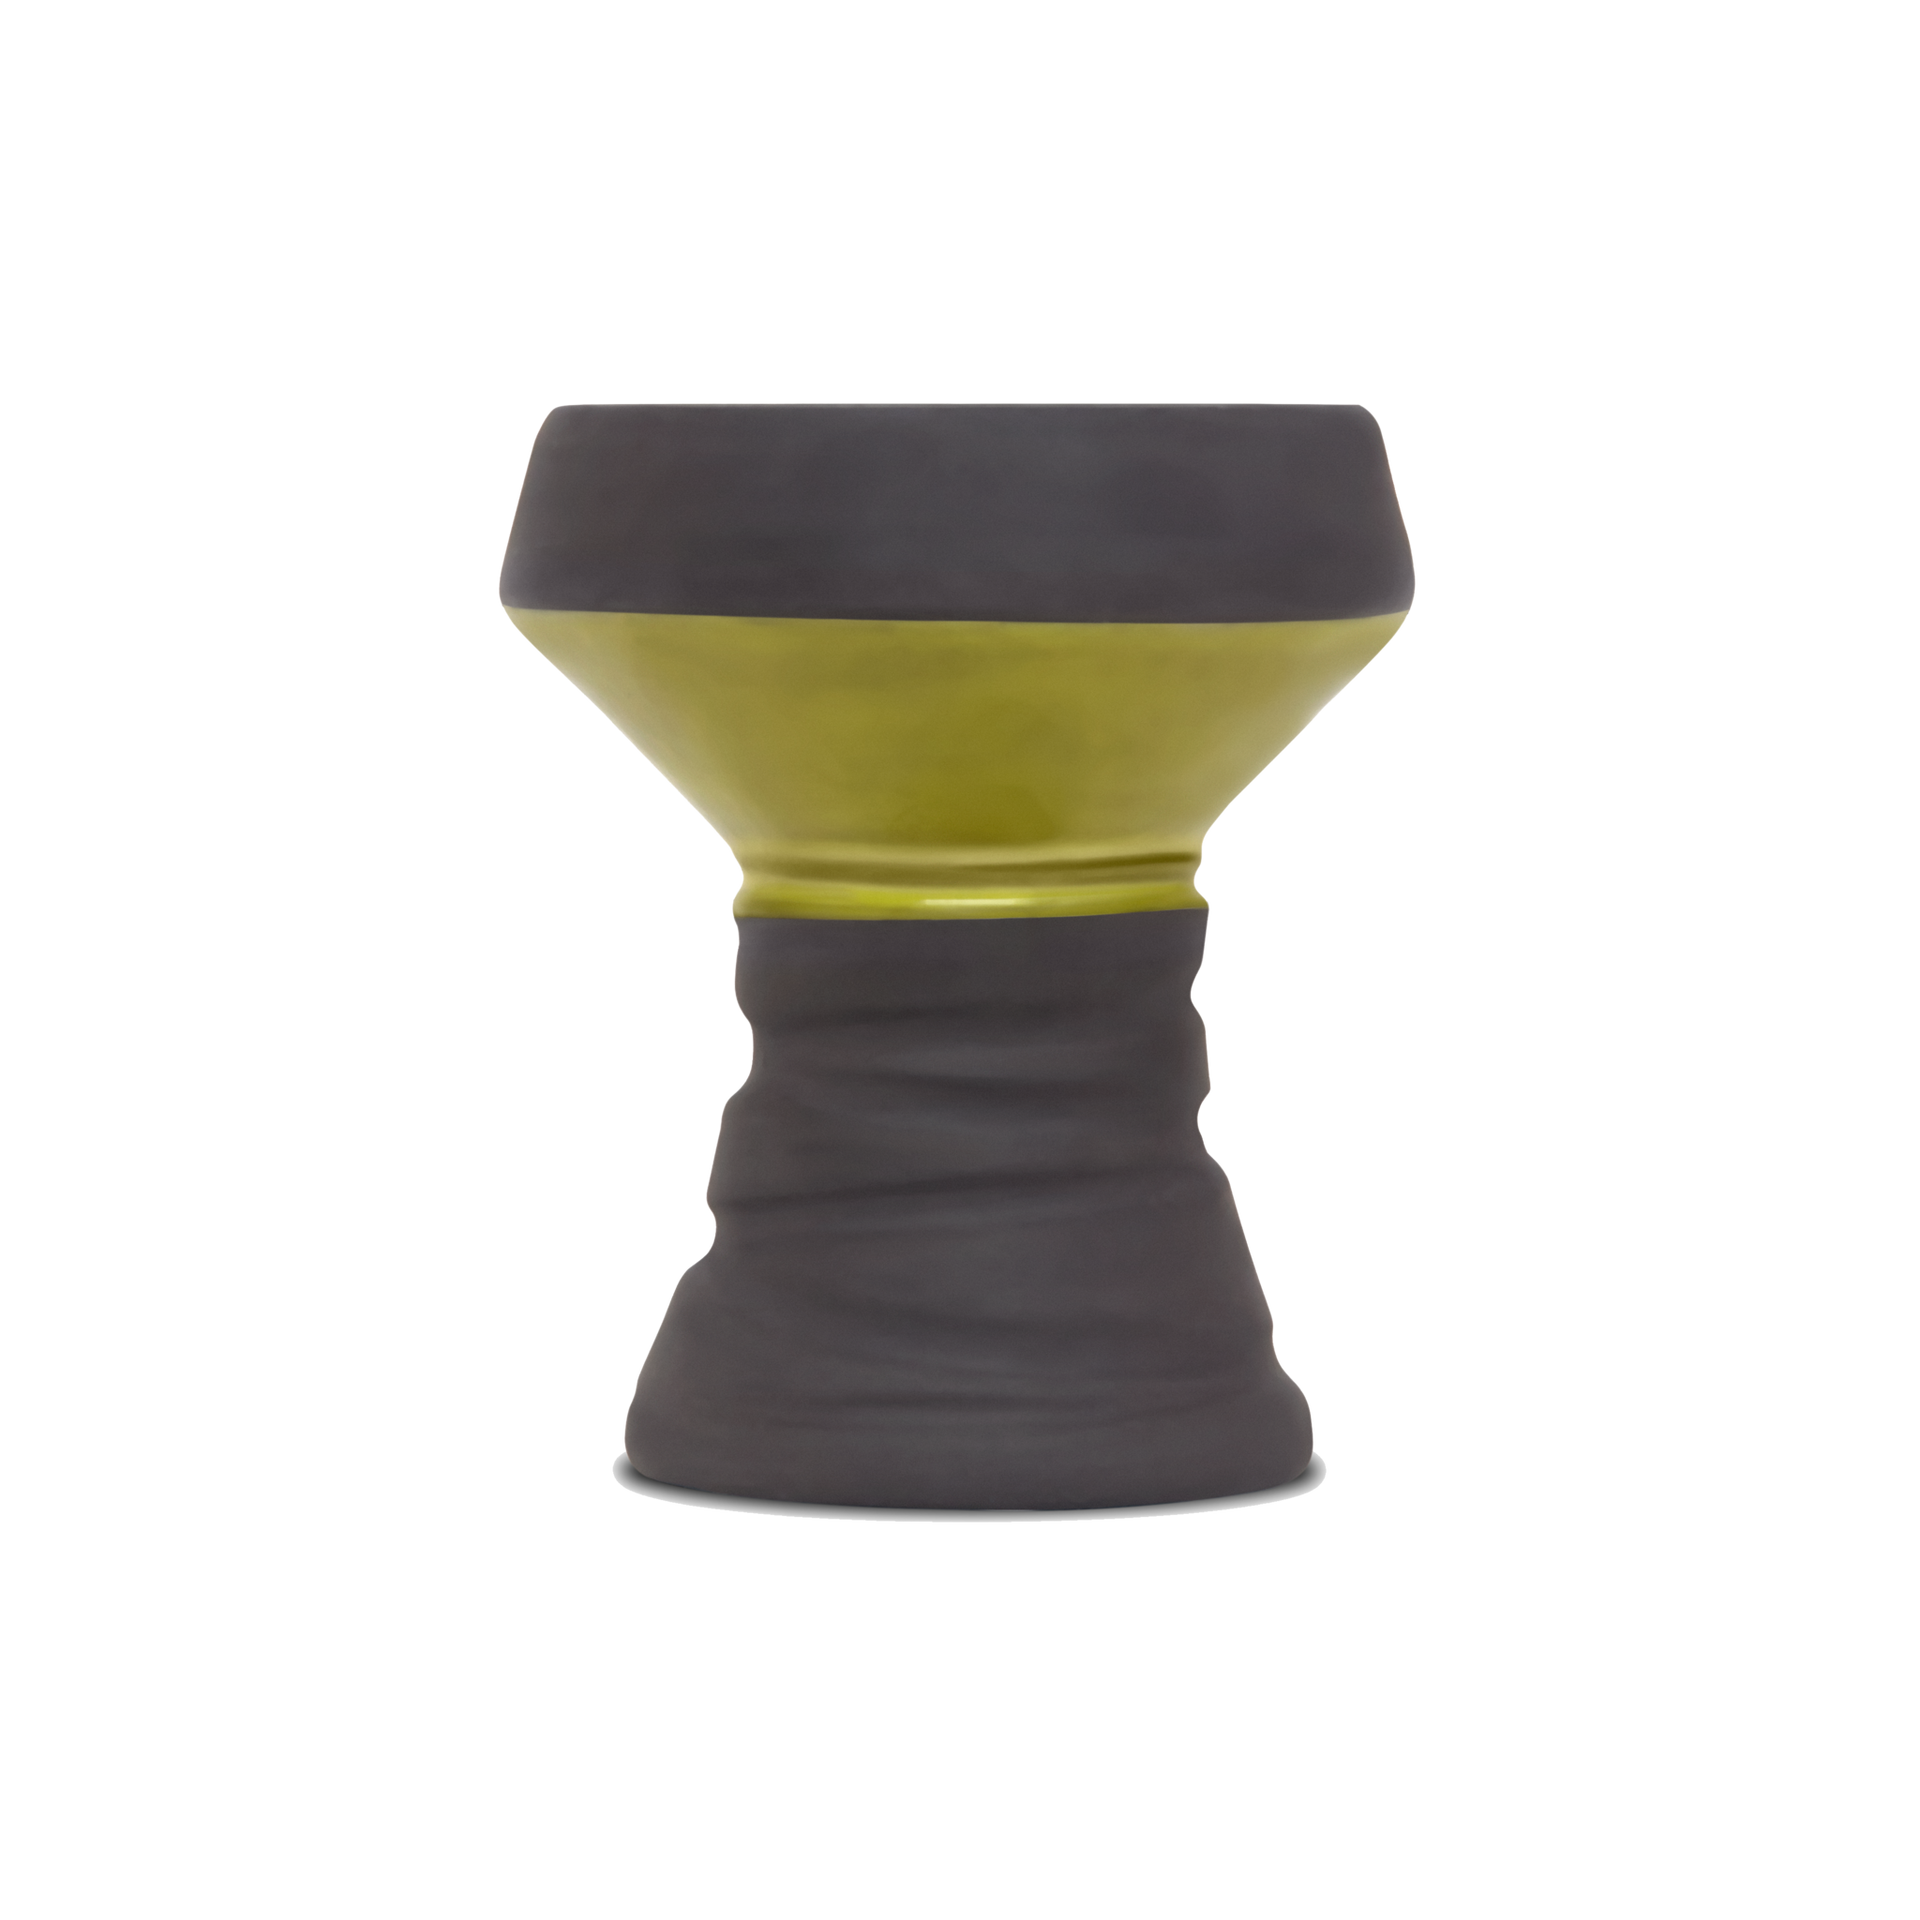 BYO Blackstone Two Tone Bowl black with yellow